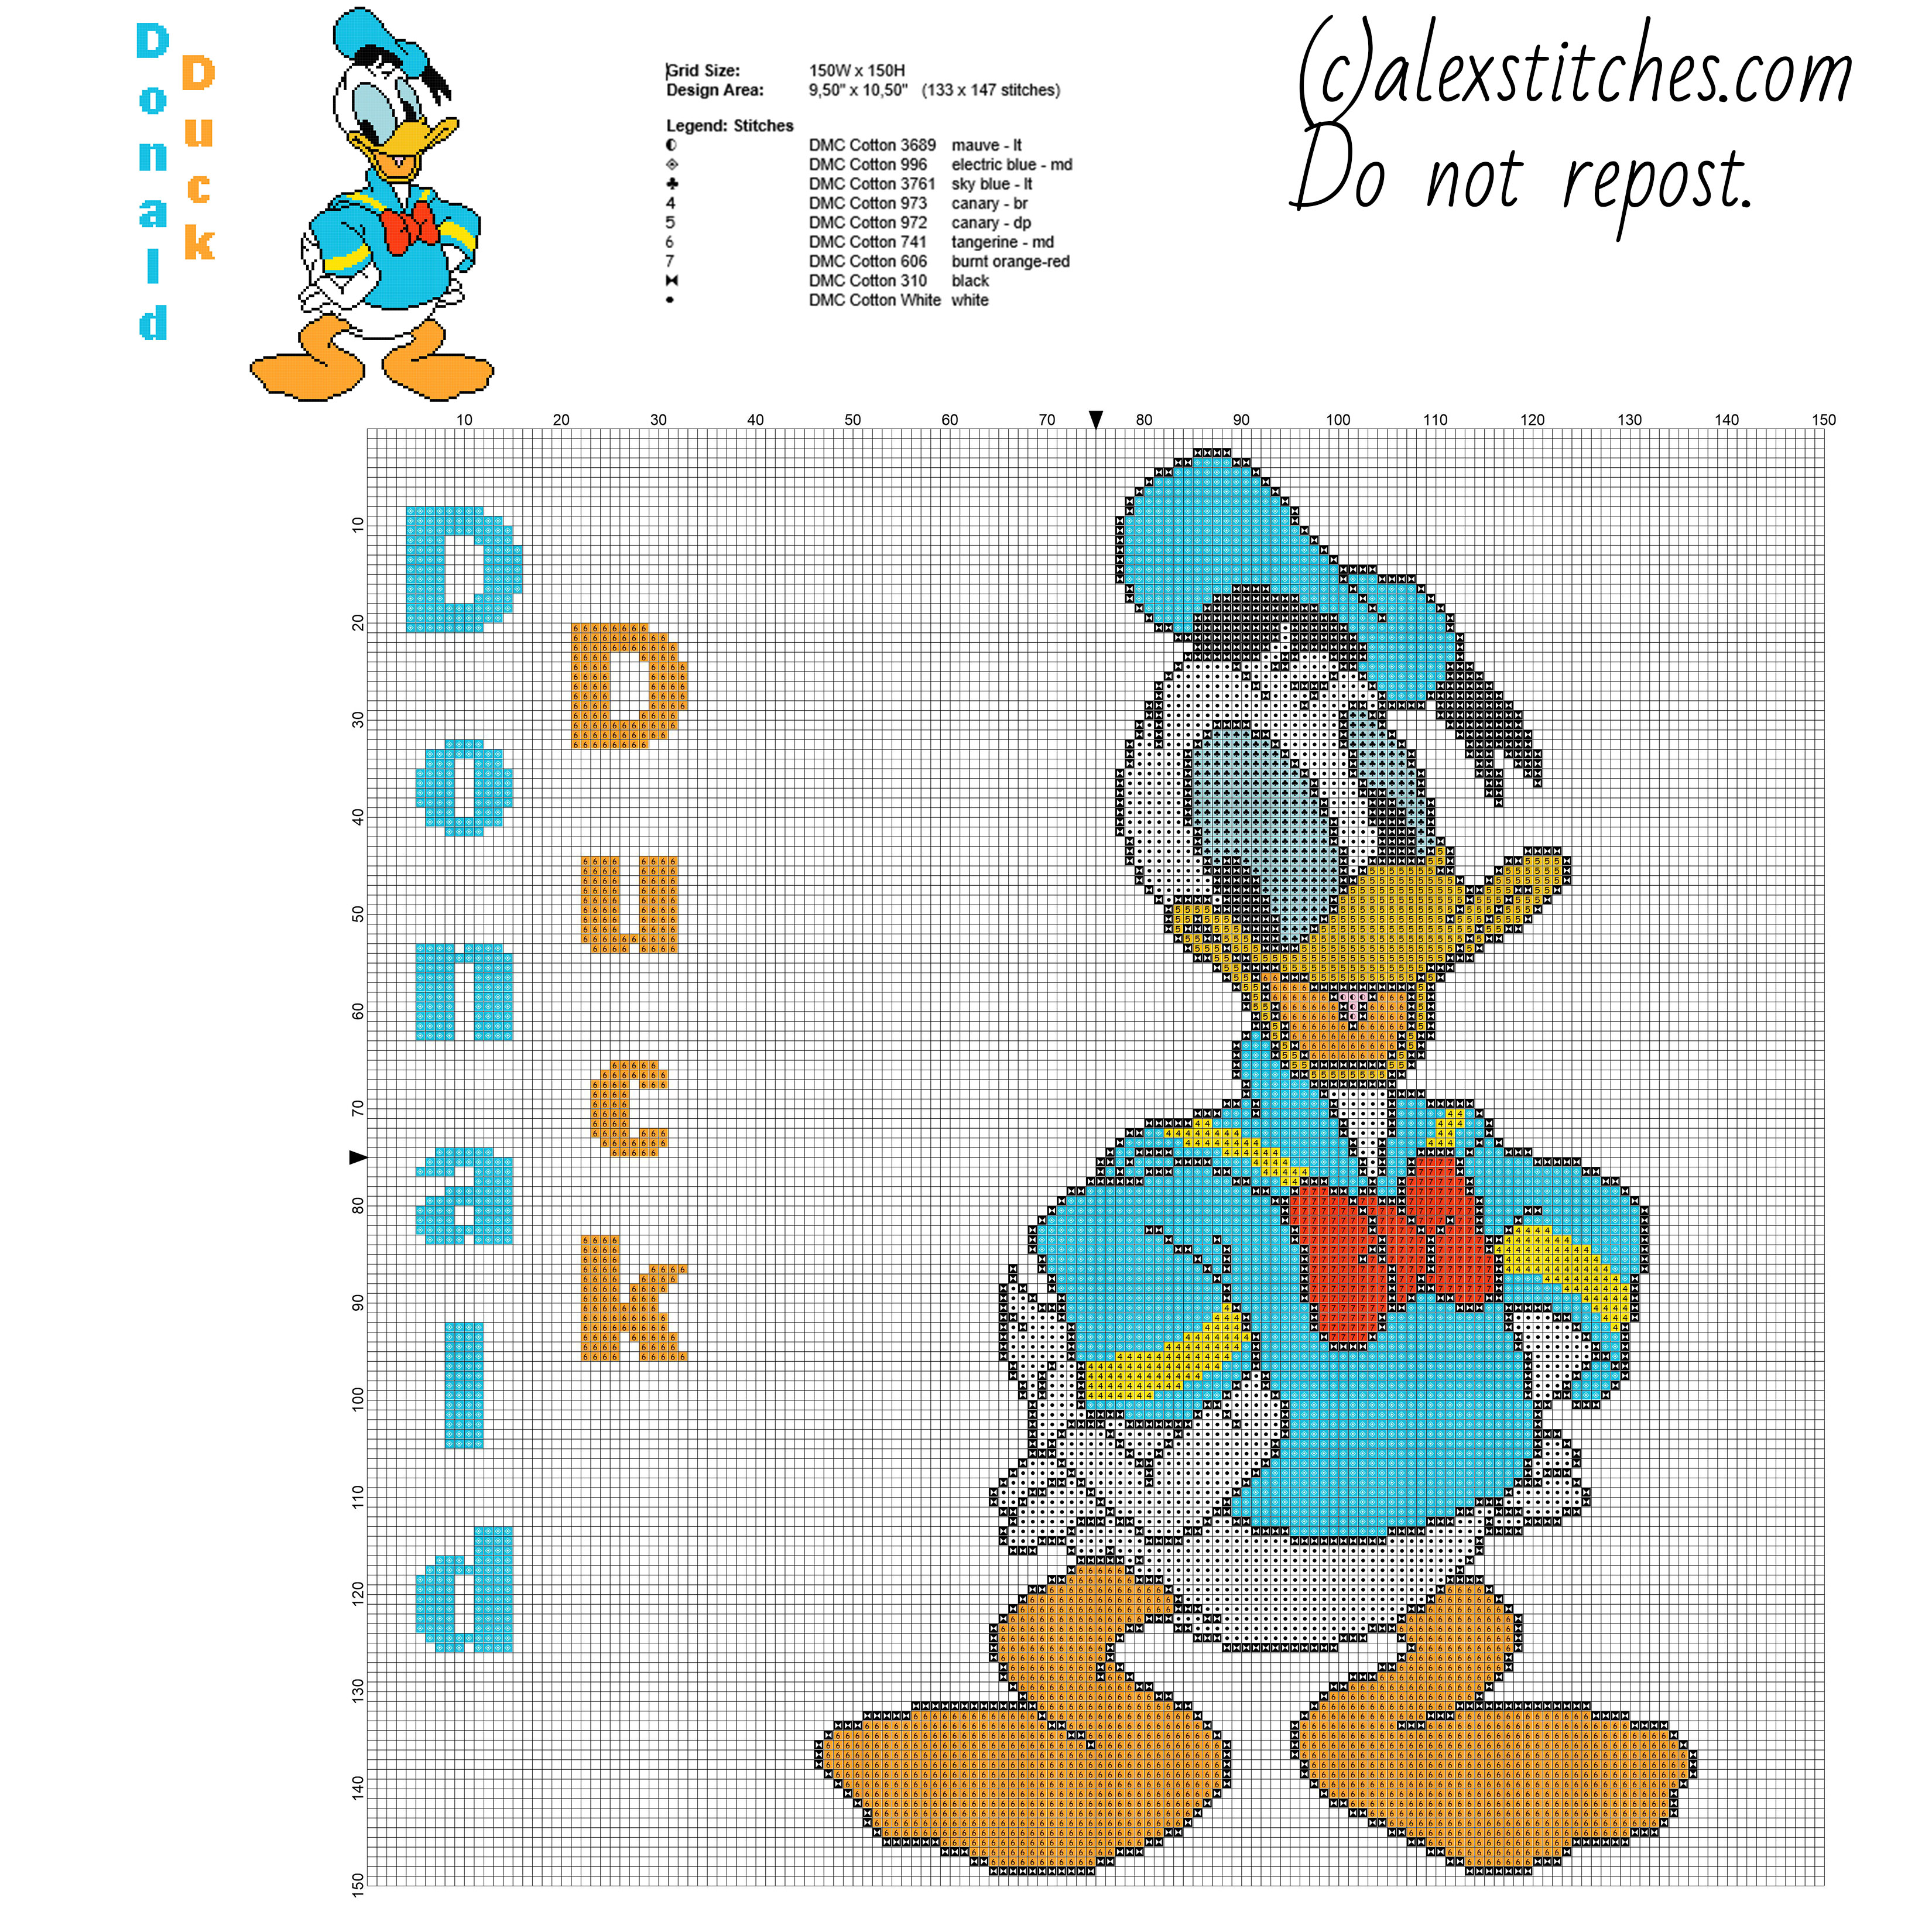 Donald Duck Disney Mickey Mouse character big size free cross stitch pattern 133 x 147 stitches 9 DMC threads